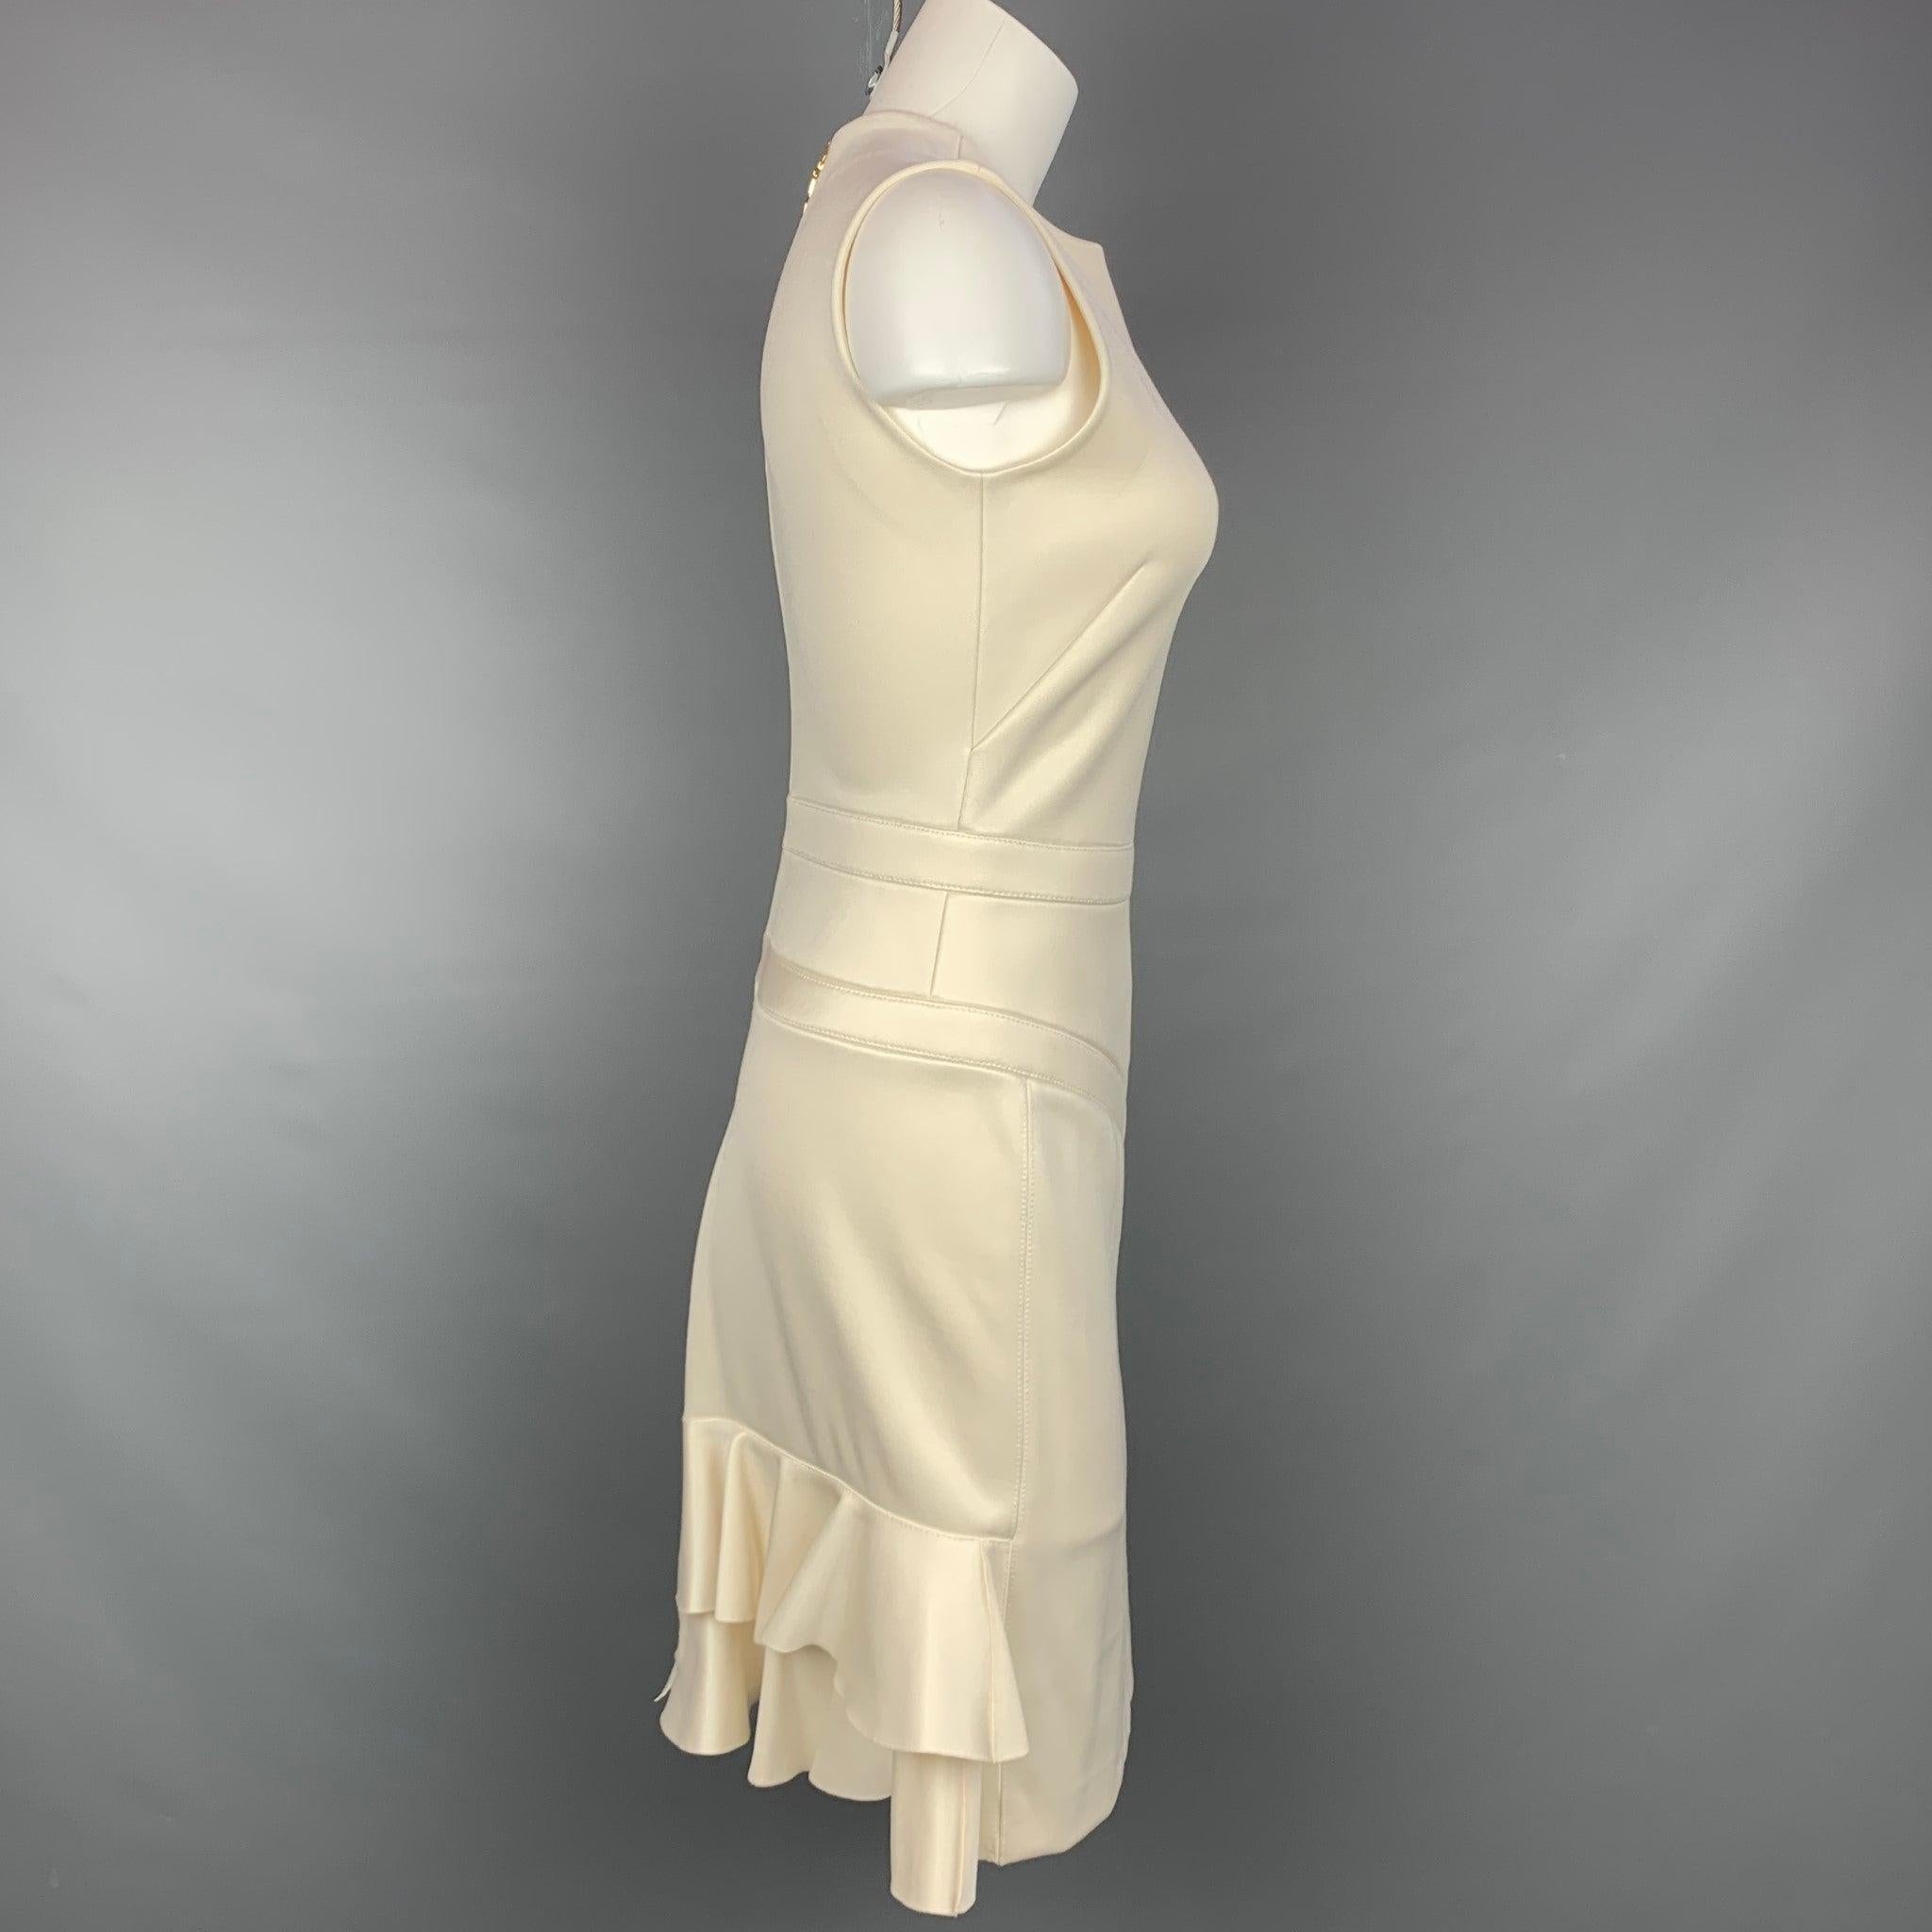 Women's LOUIS VUITTON Size S Beige Ecru Wool Blend Ruffled Fitted Cocktail Dress For Sale